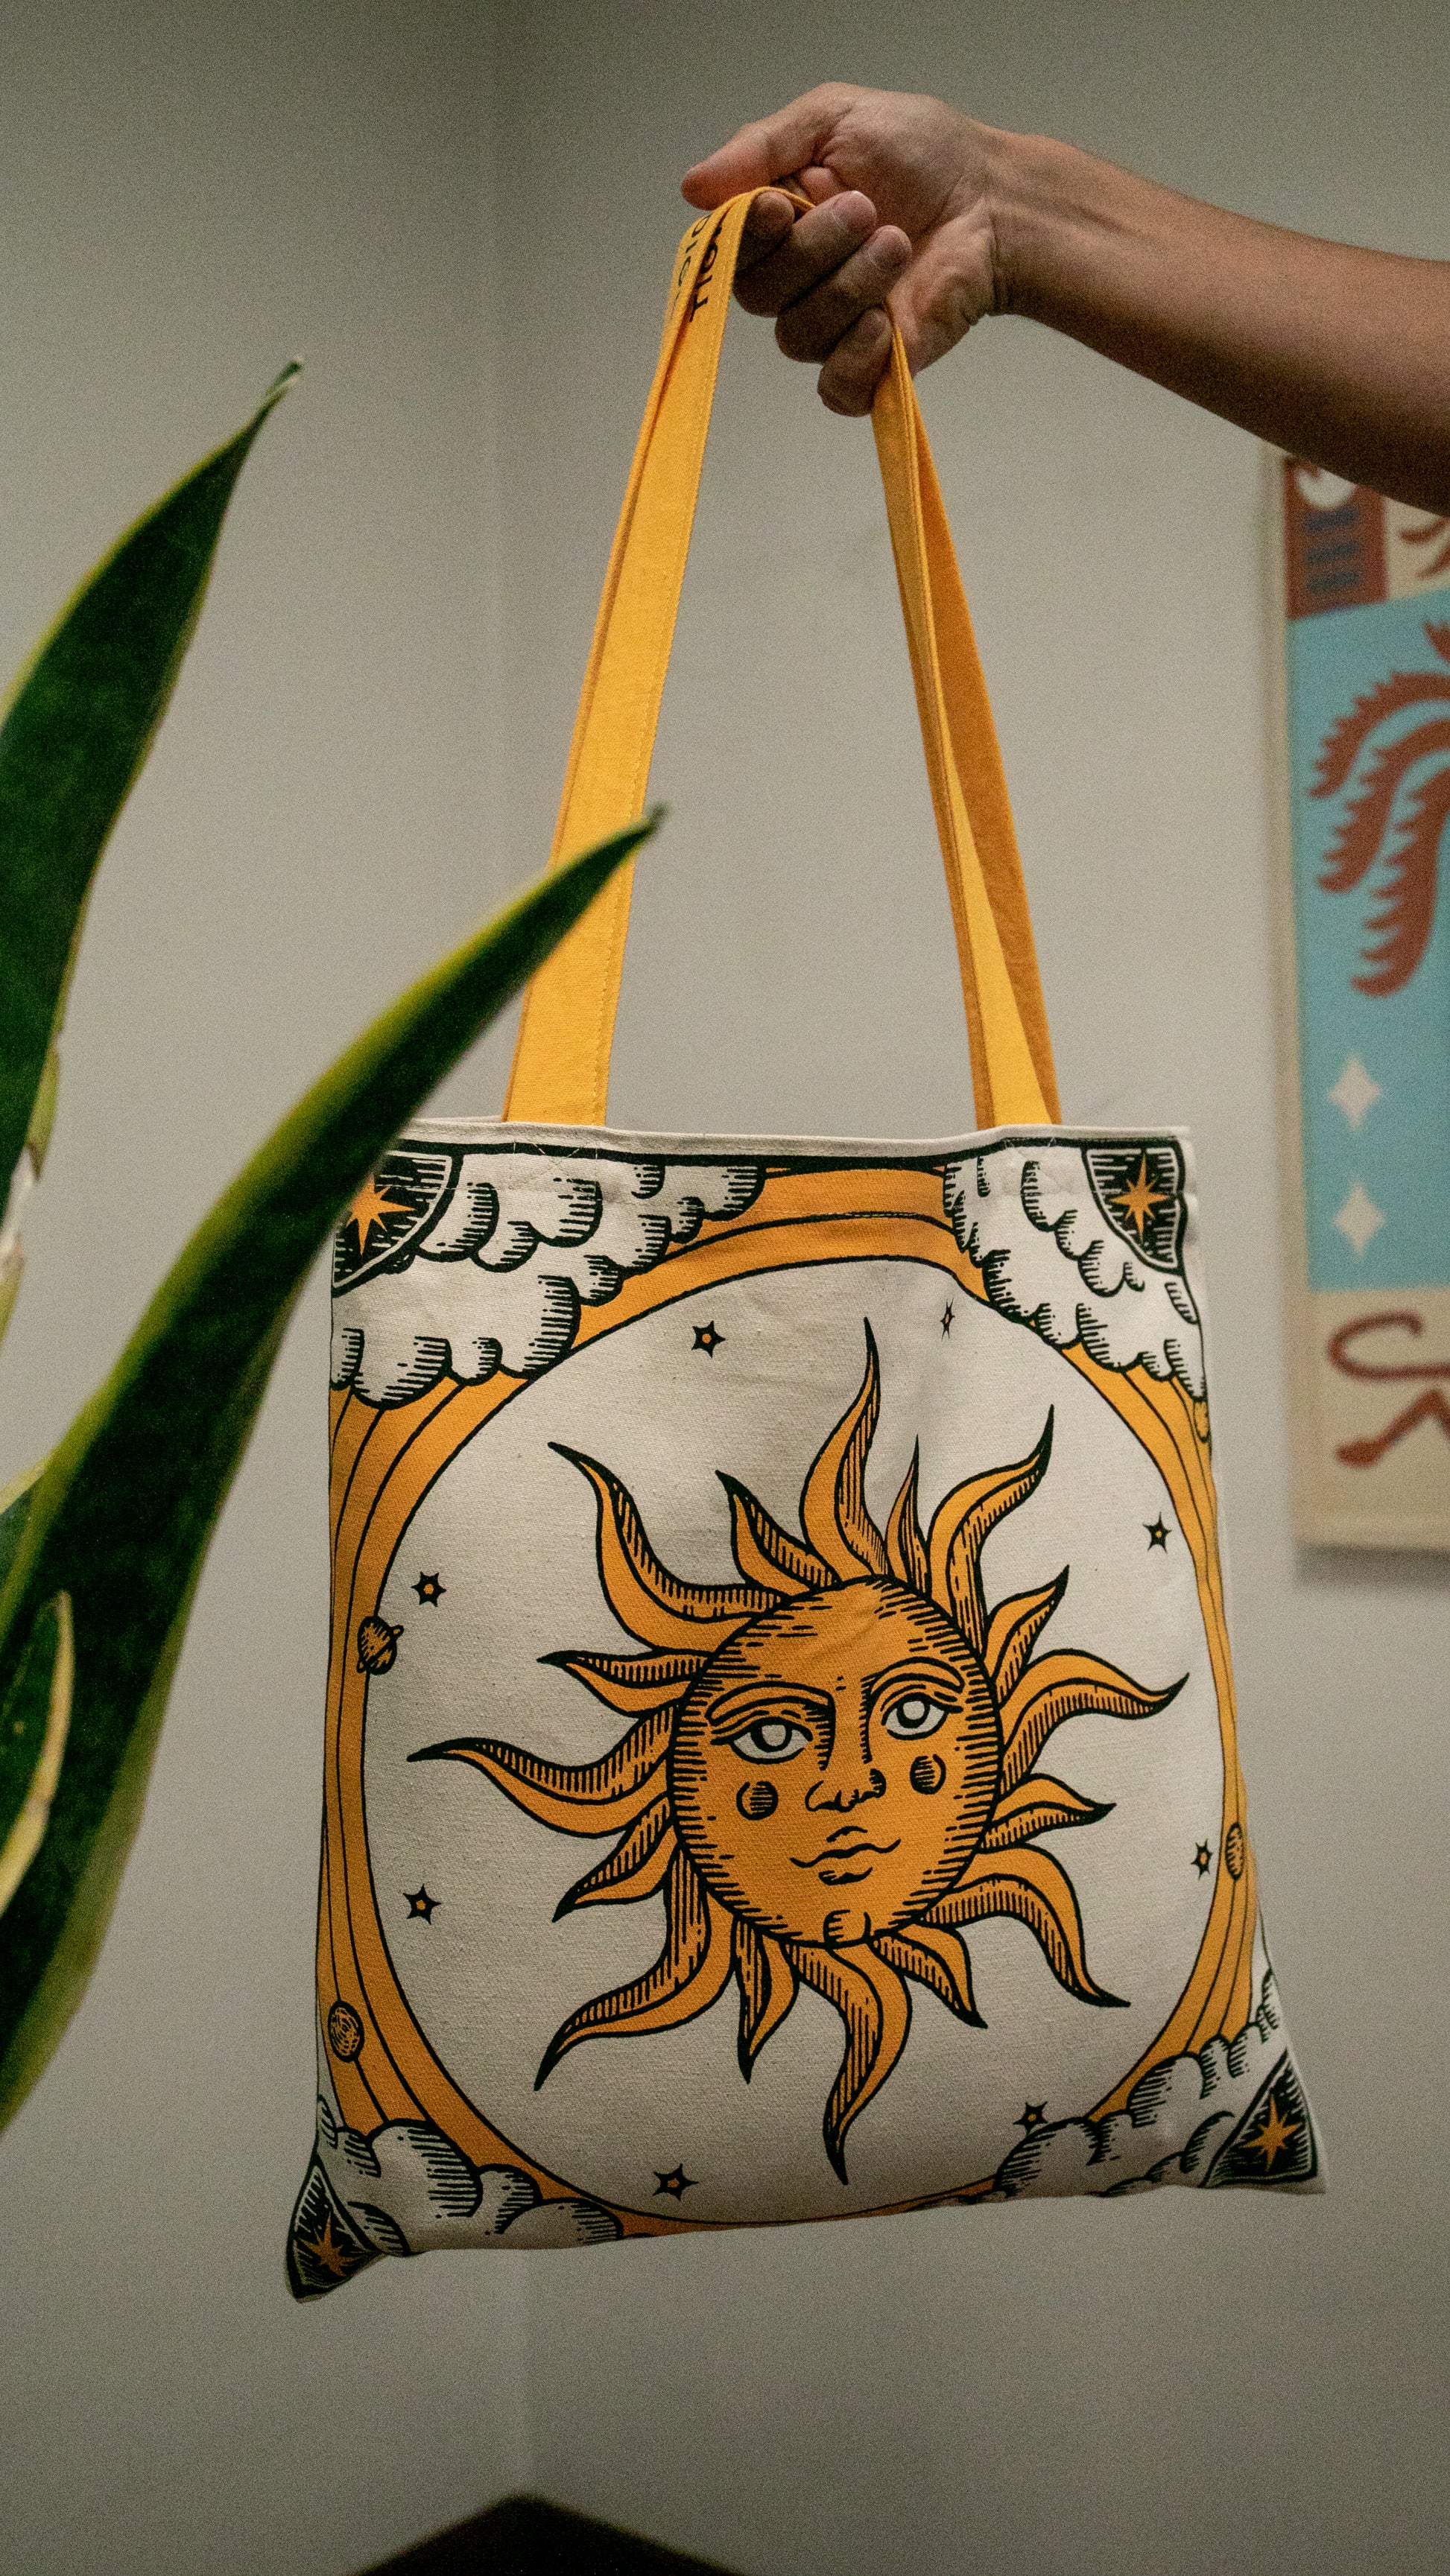 Soleil - Lune Tote Bag